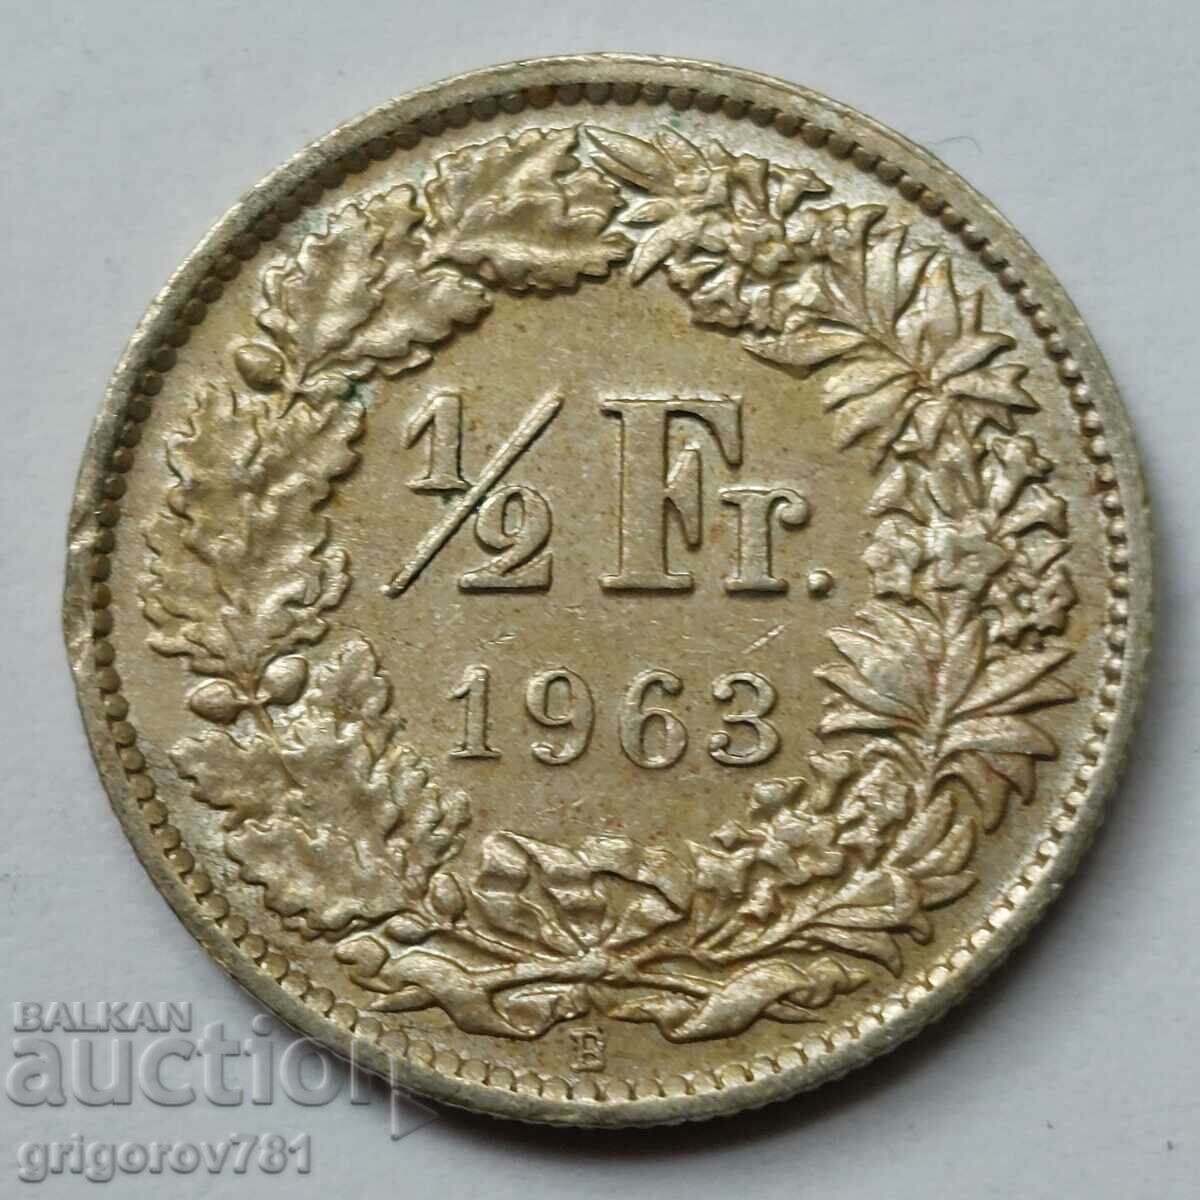 1/2 Franc Silver Switzerland 1963 B - Silver Coin #34